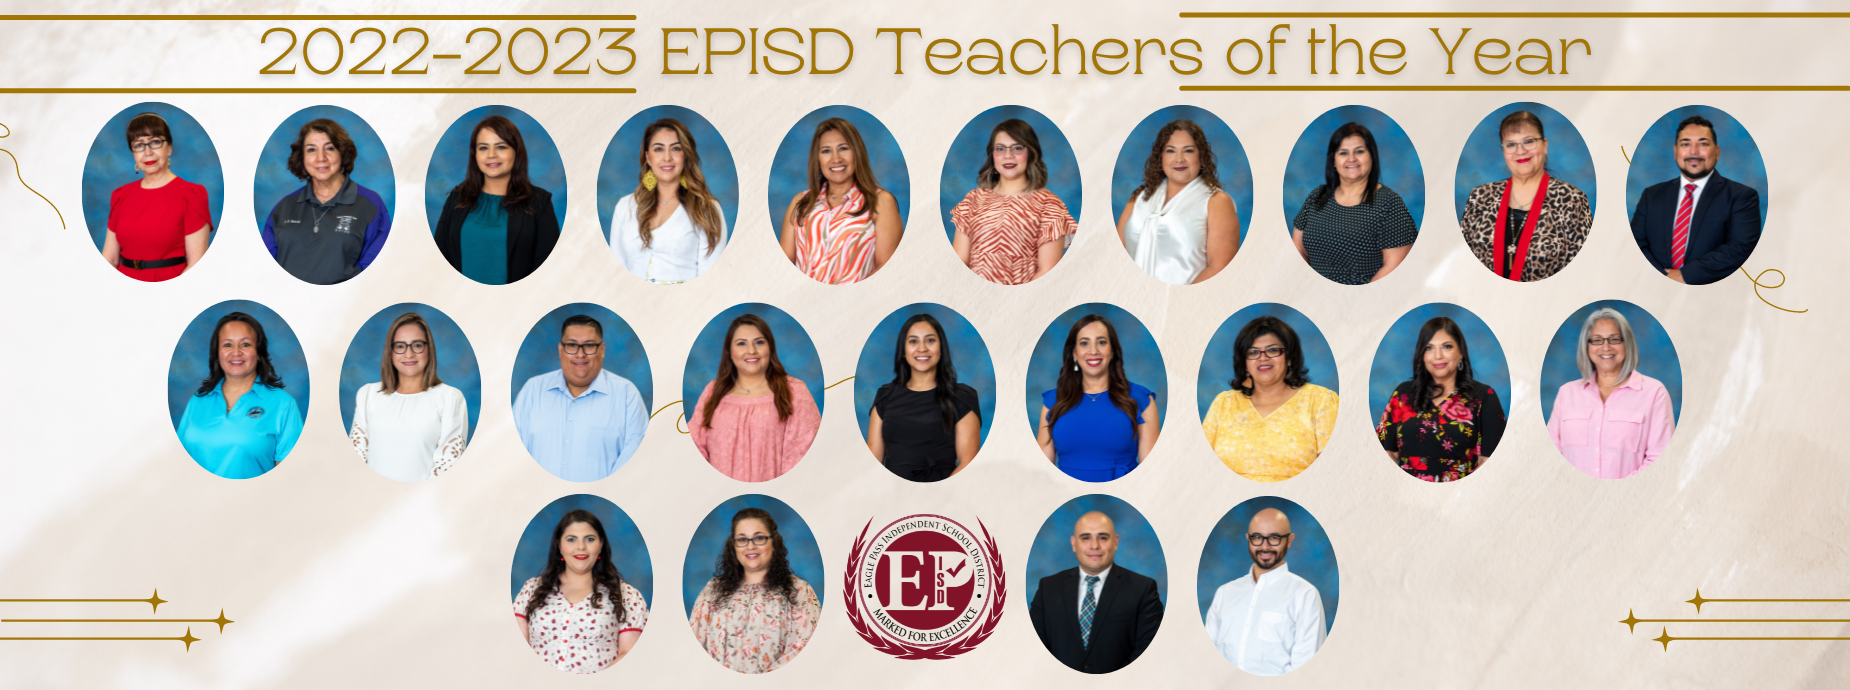 2022 - 2023 EPISD Teachers of the Year banner